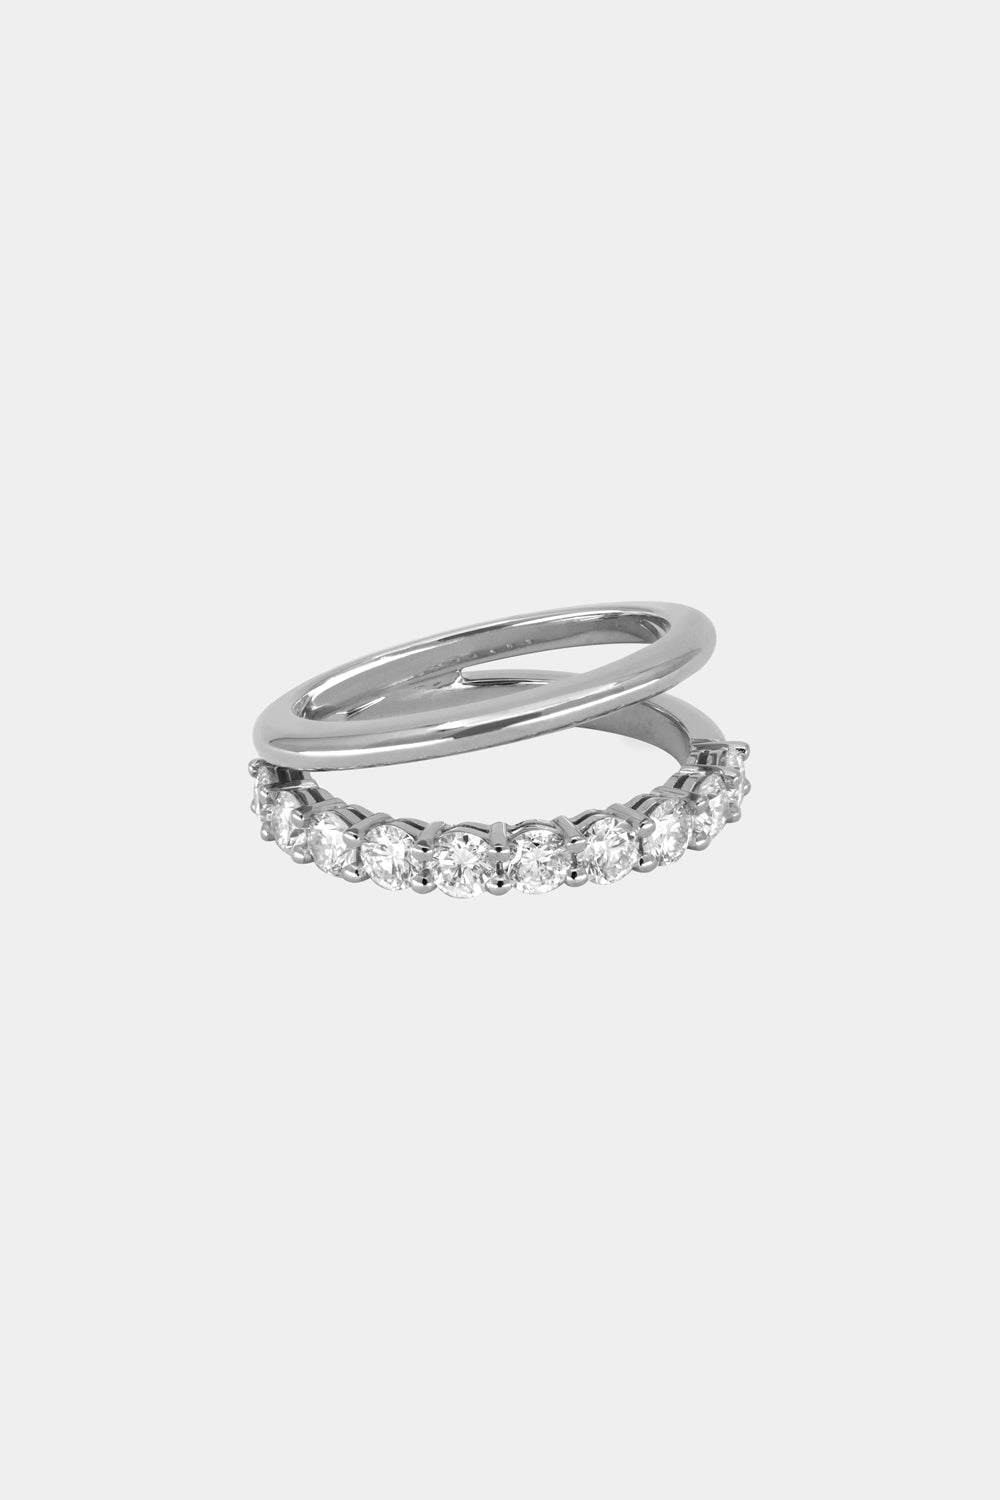 Double Band 10pt Round Diamond Ring | 18K White Gold